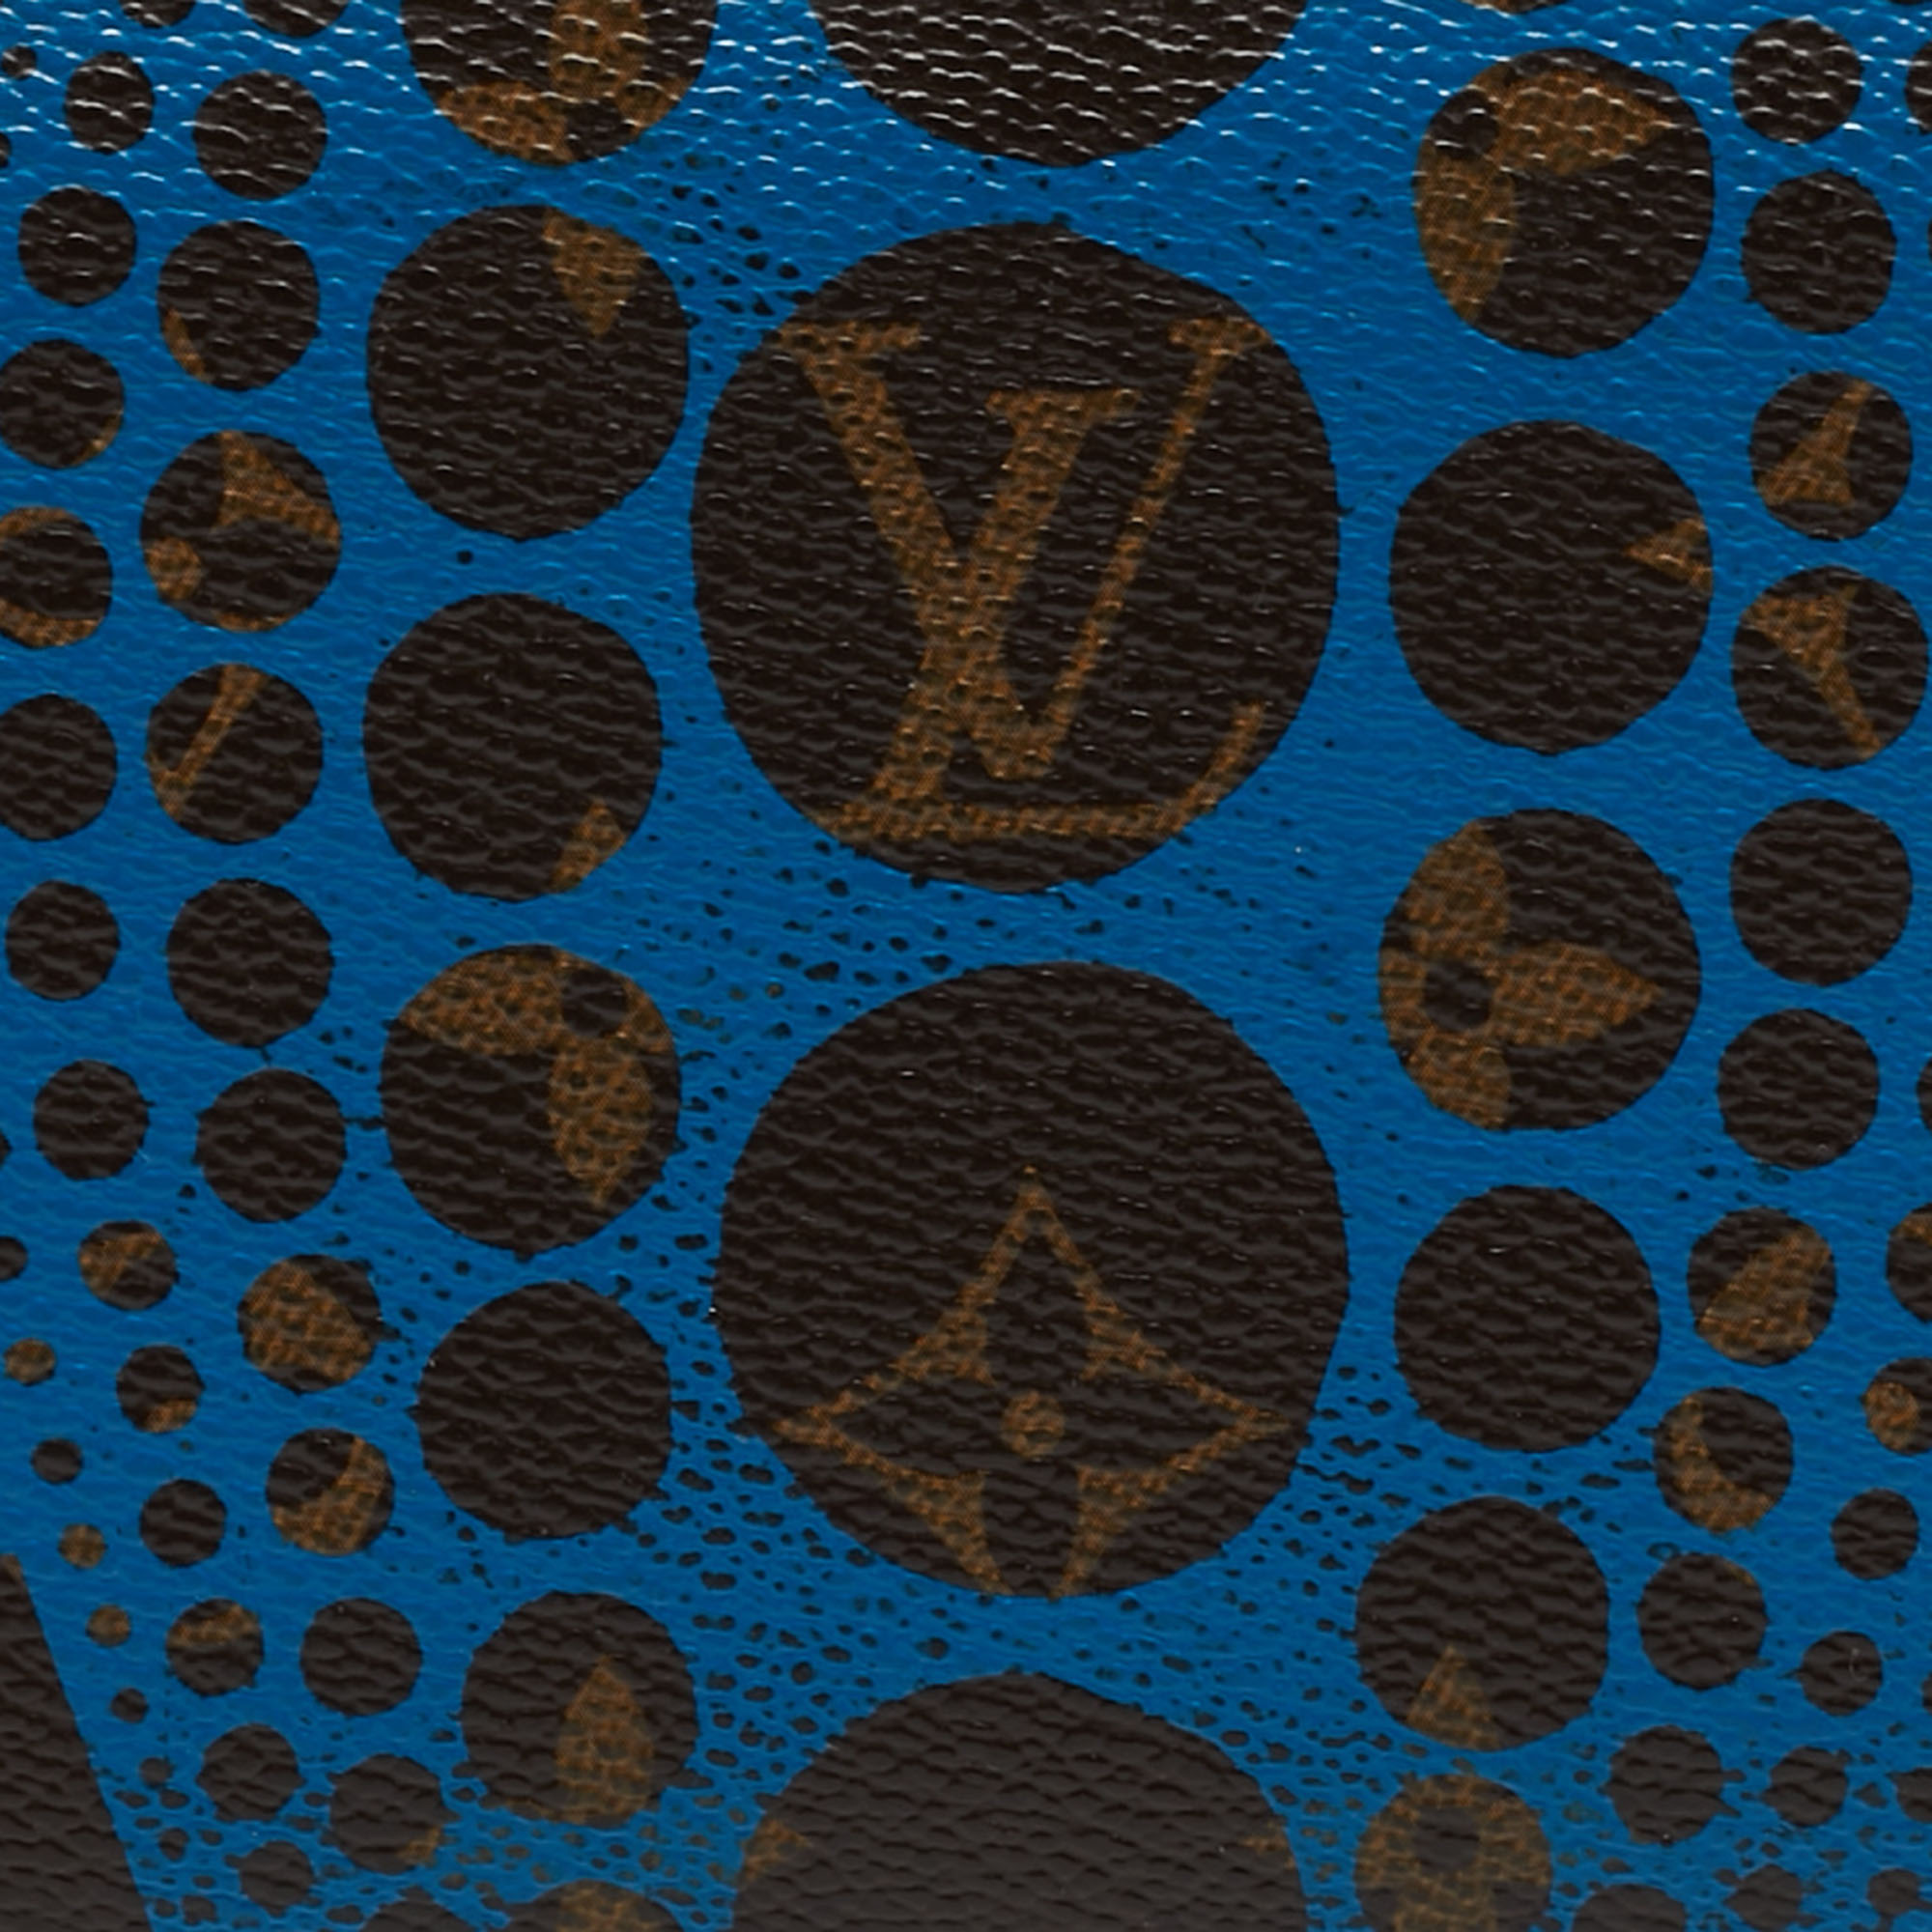 Louis Vuitton X Yayoi Kusama Monogram Canvas Limited Edition Cosmic Pumpkin Dots Zippy Wallet